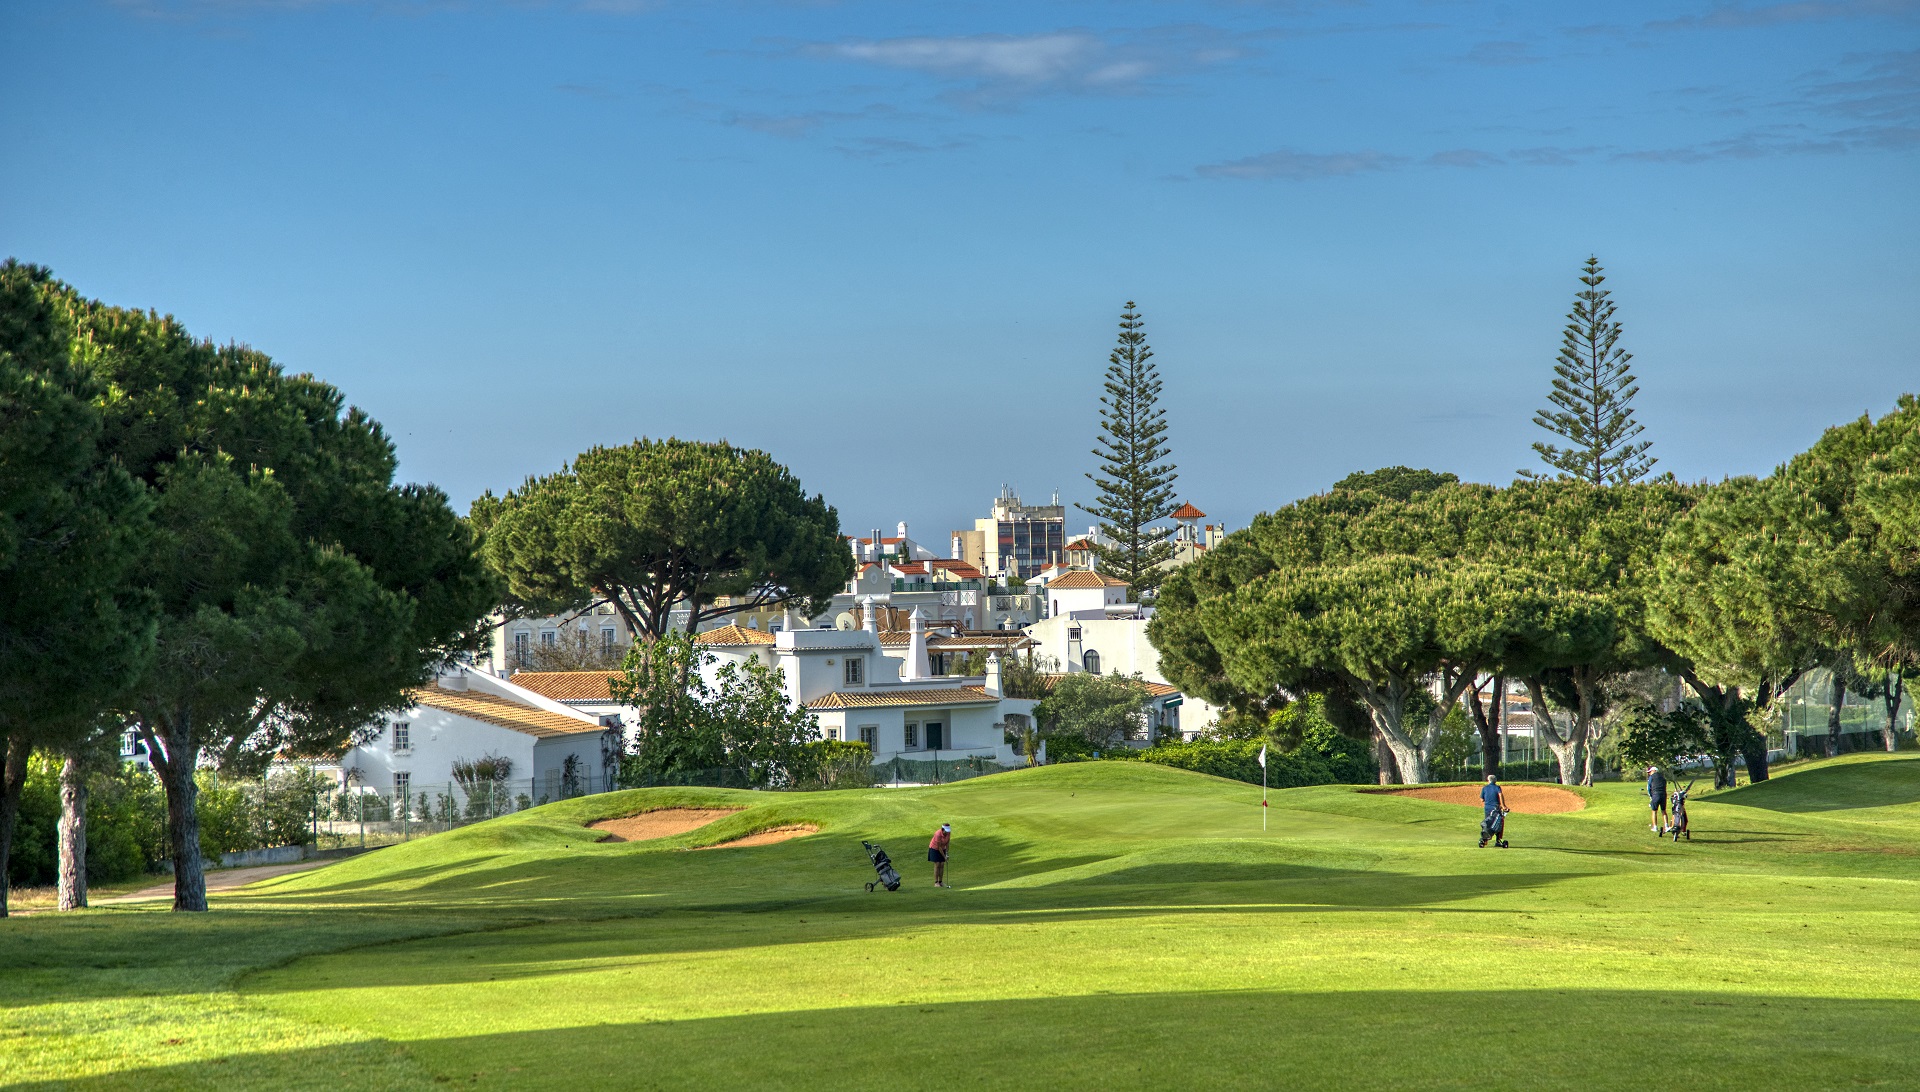 Dom Pedro Pinhal | Golf i Vilamoura, Algarve